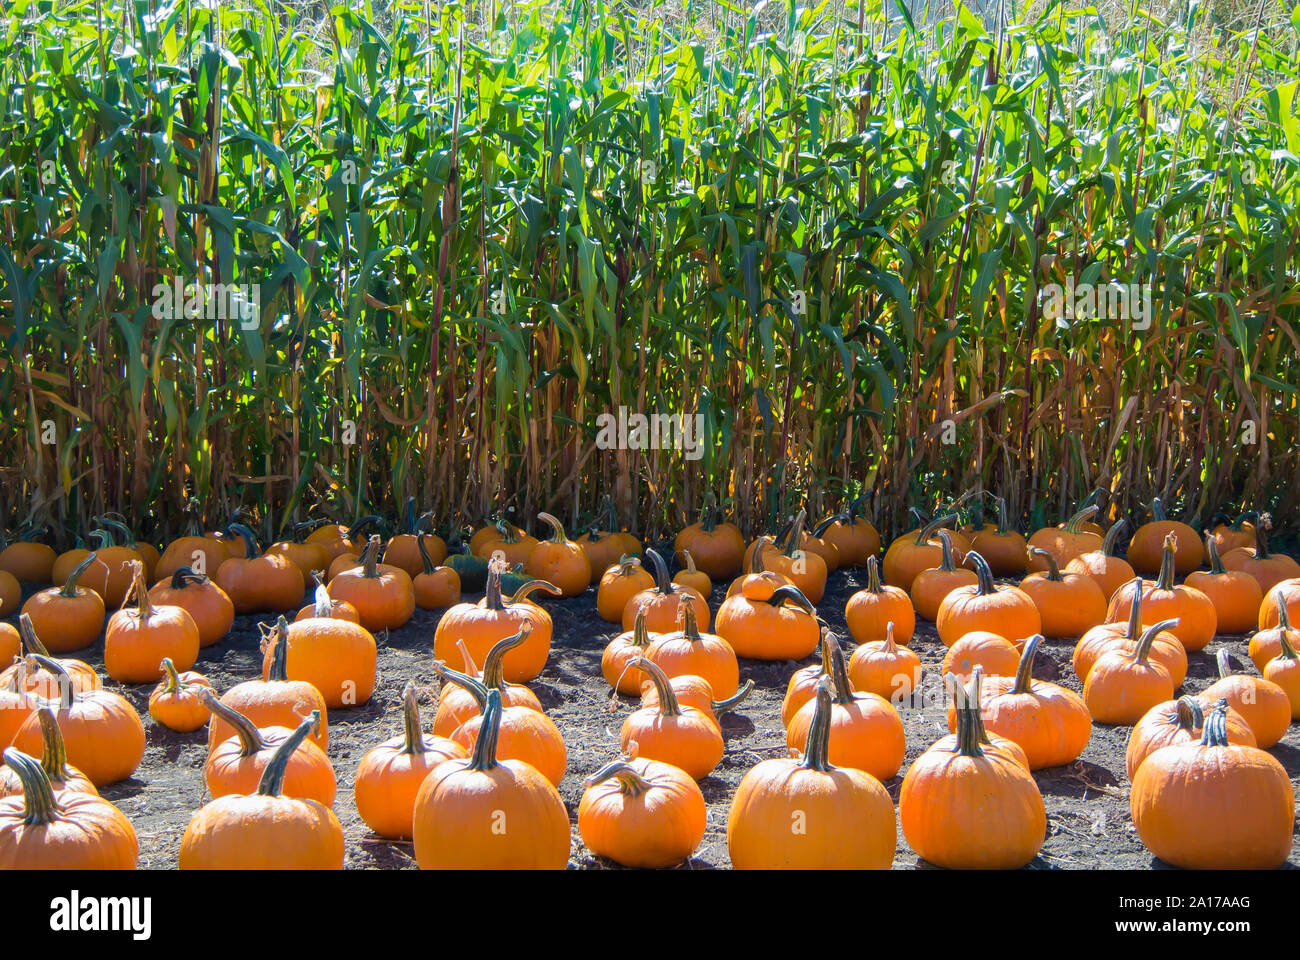 Pumpkin Patch Alongside Corn Stalks Stock Photo